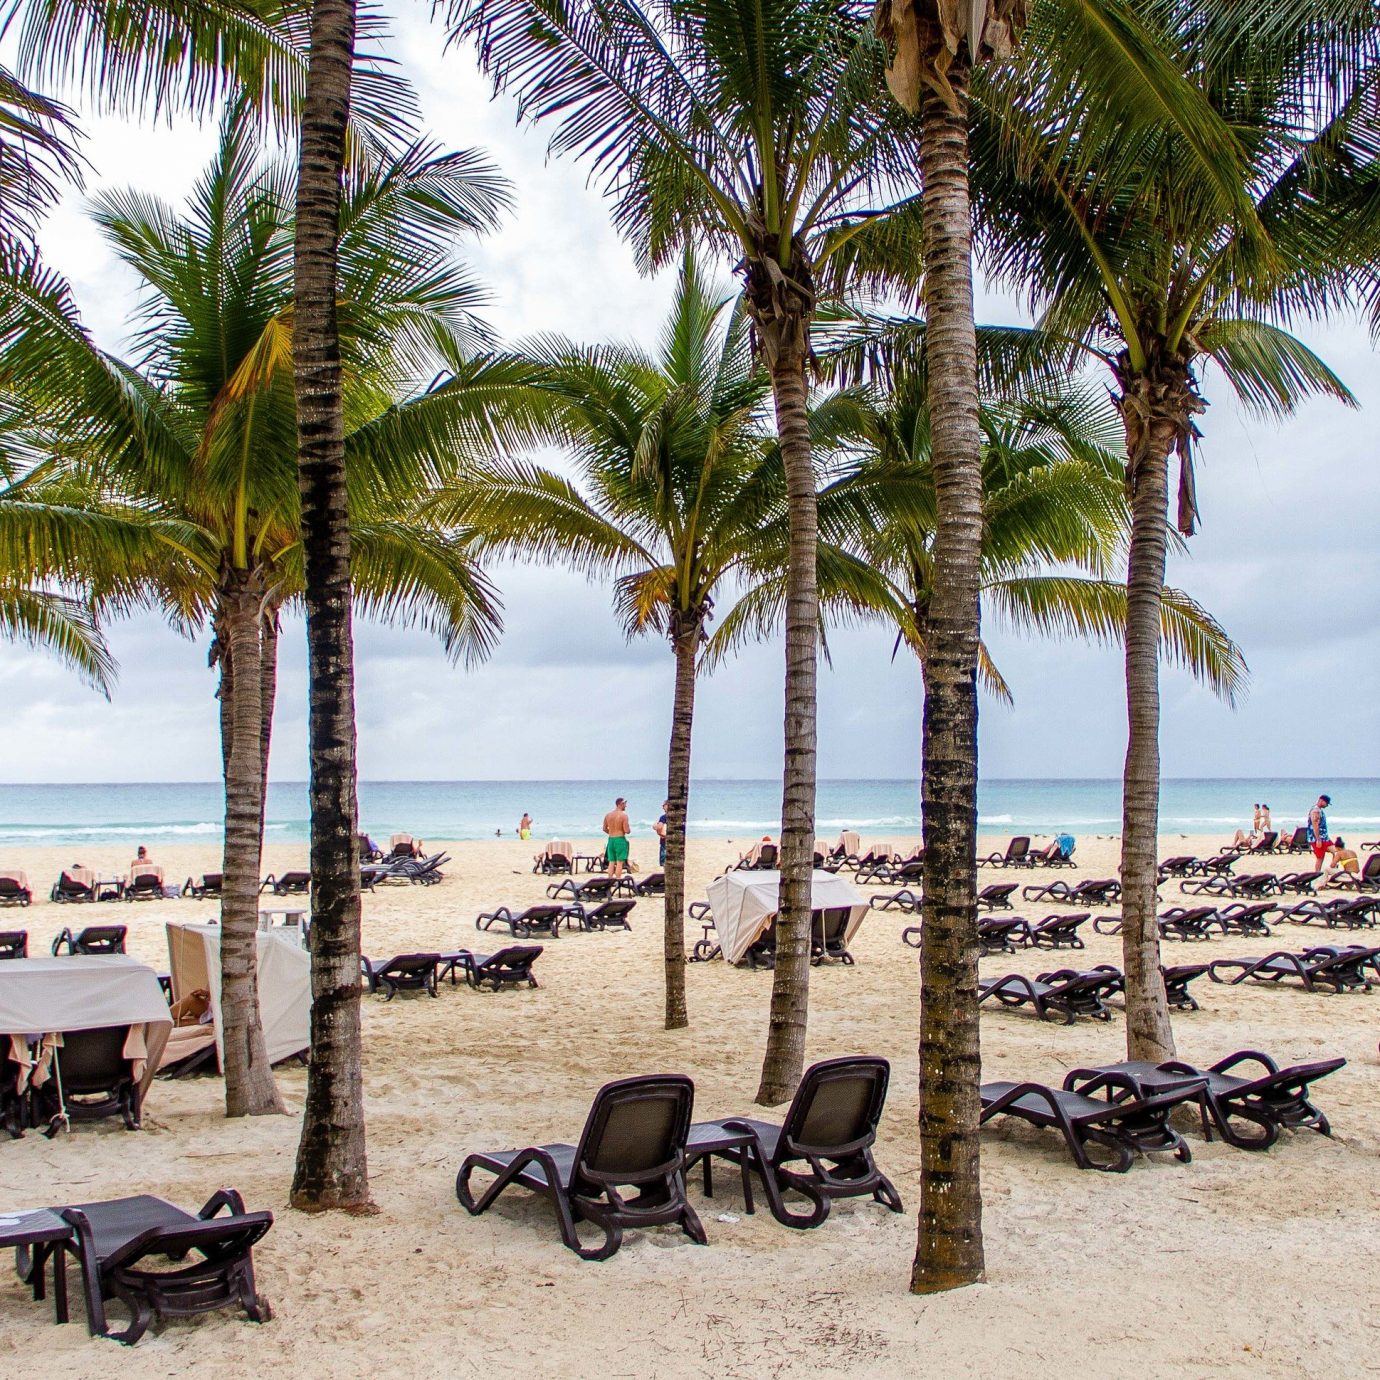 All-inclusive All-Inclusive Resorts Mexico Riviera Maya, Mexico Beach arecales palm tree tree Resort tropics shore plant caribbean Sea sky sand coconut